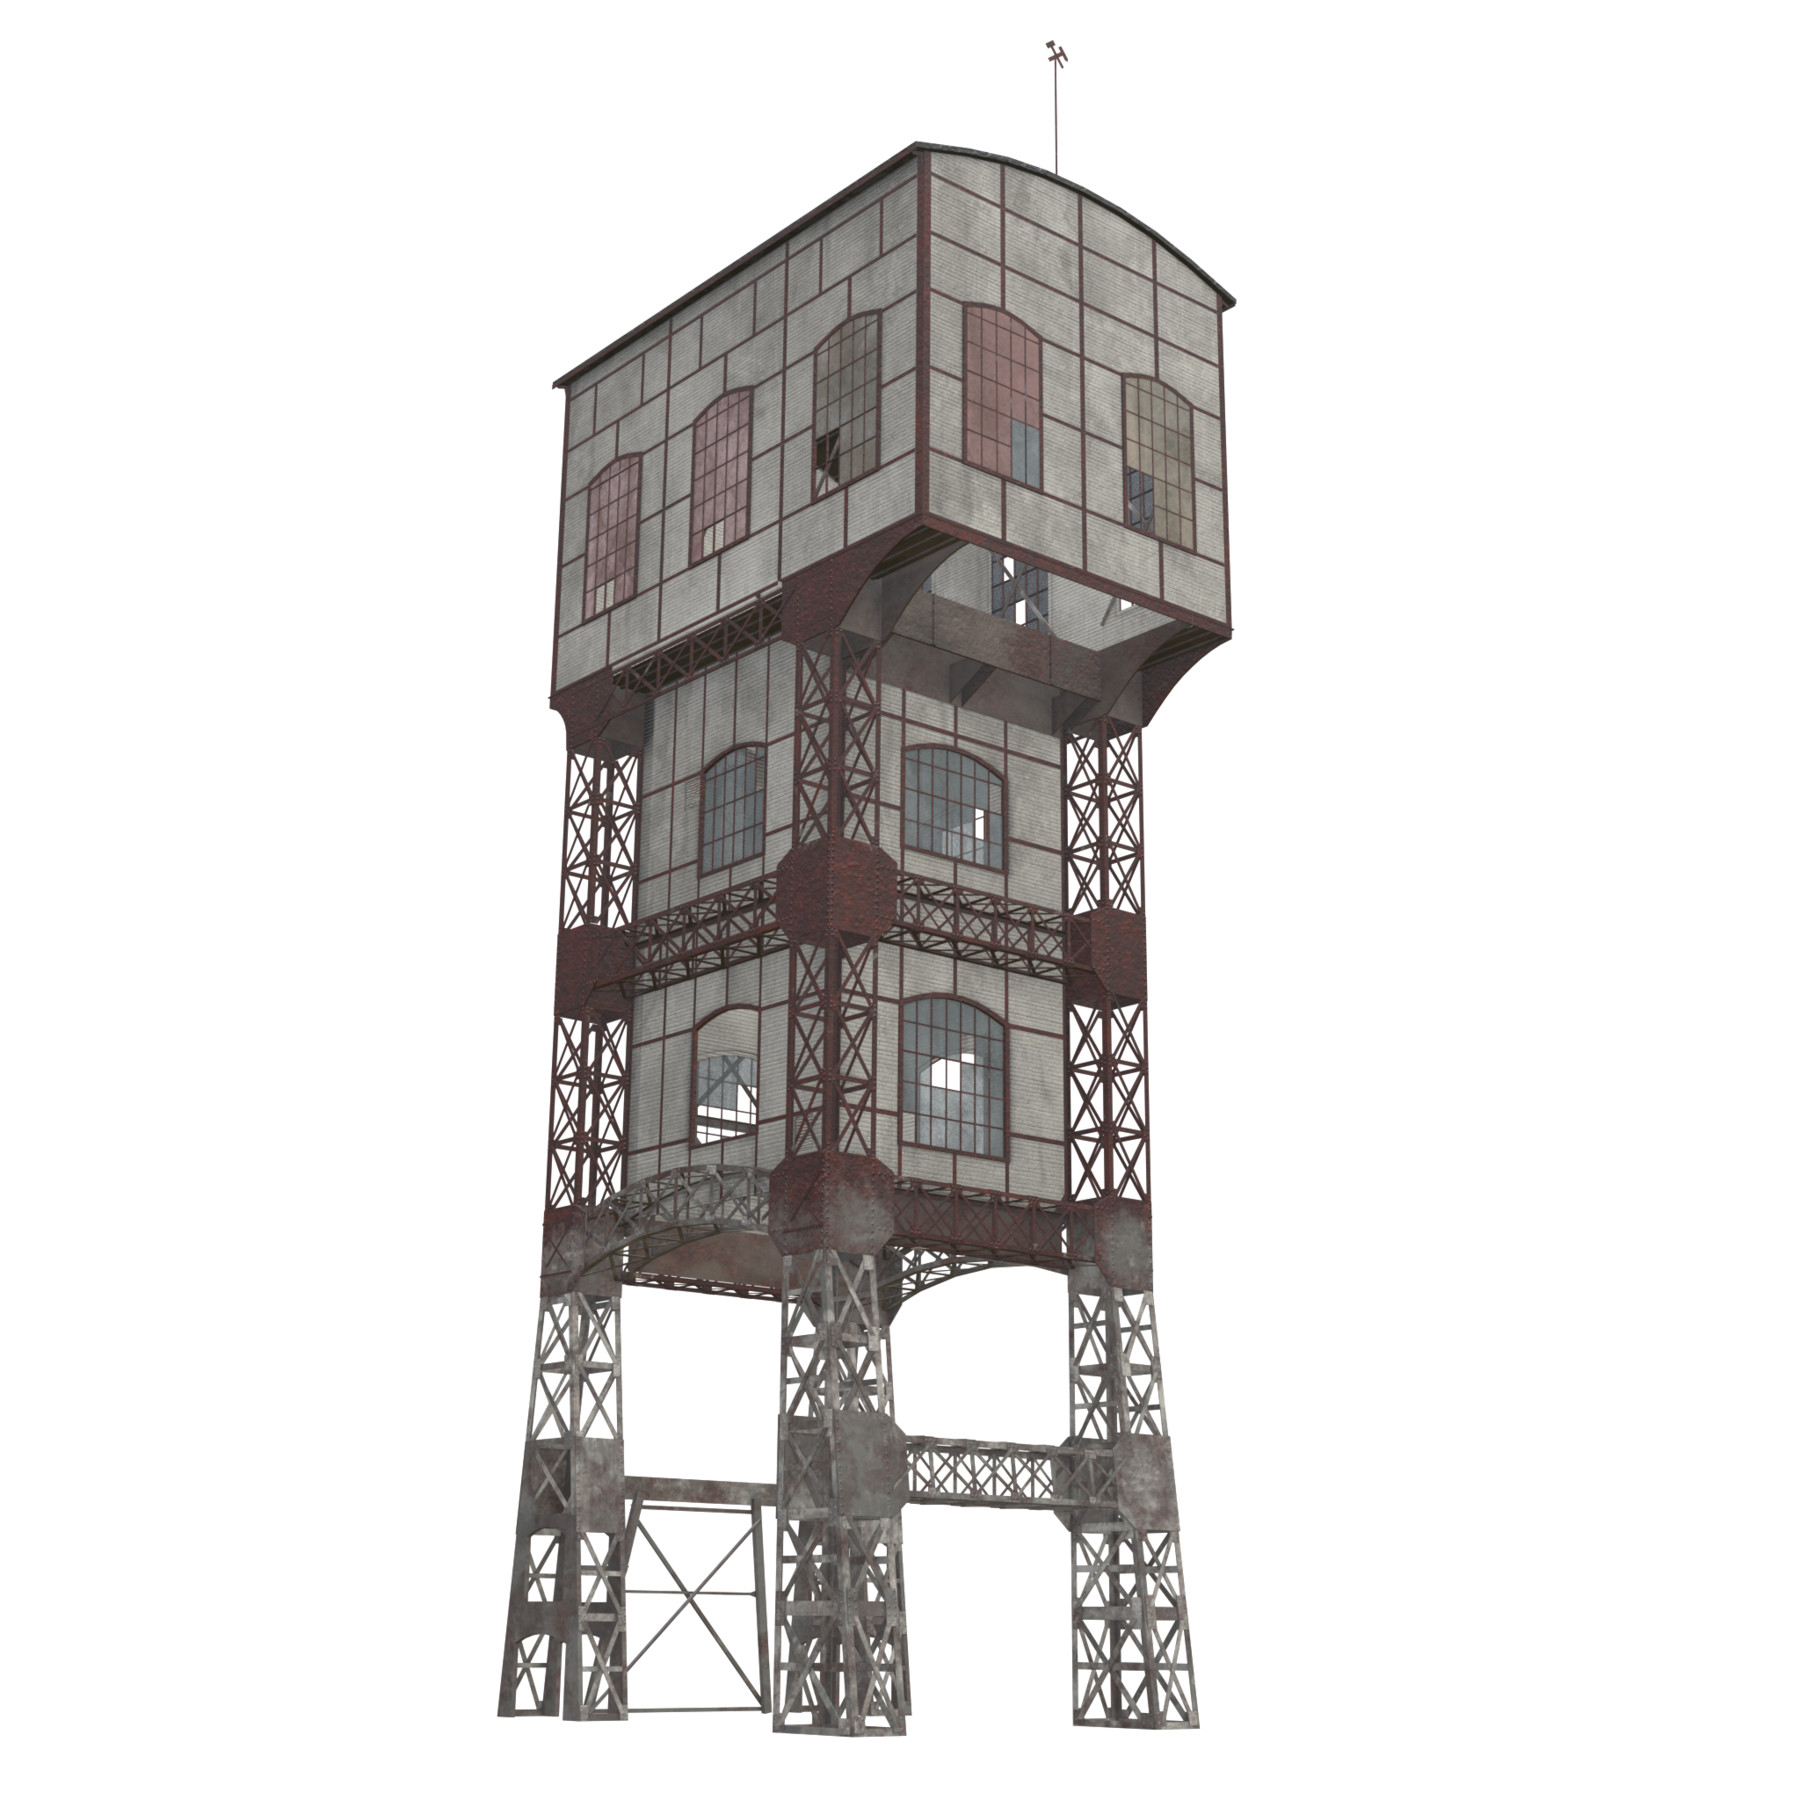 mine shaft tower